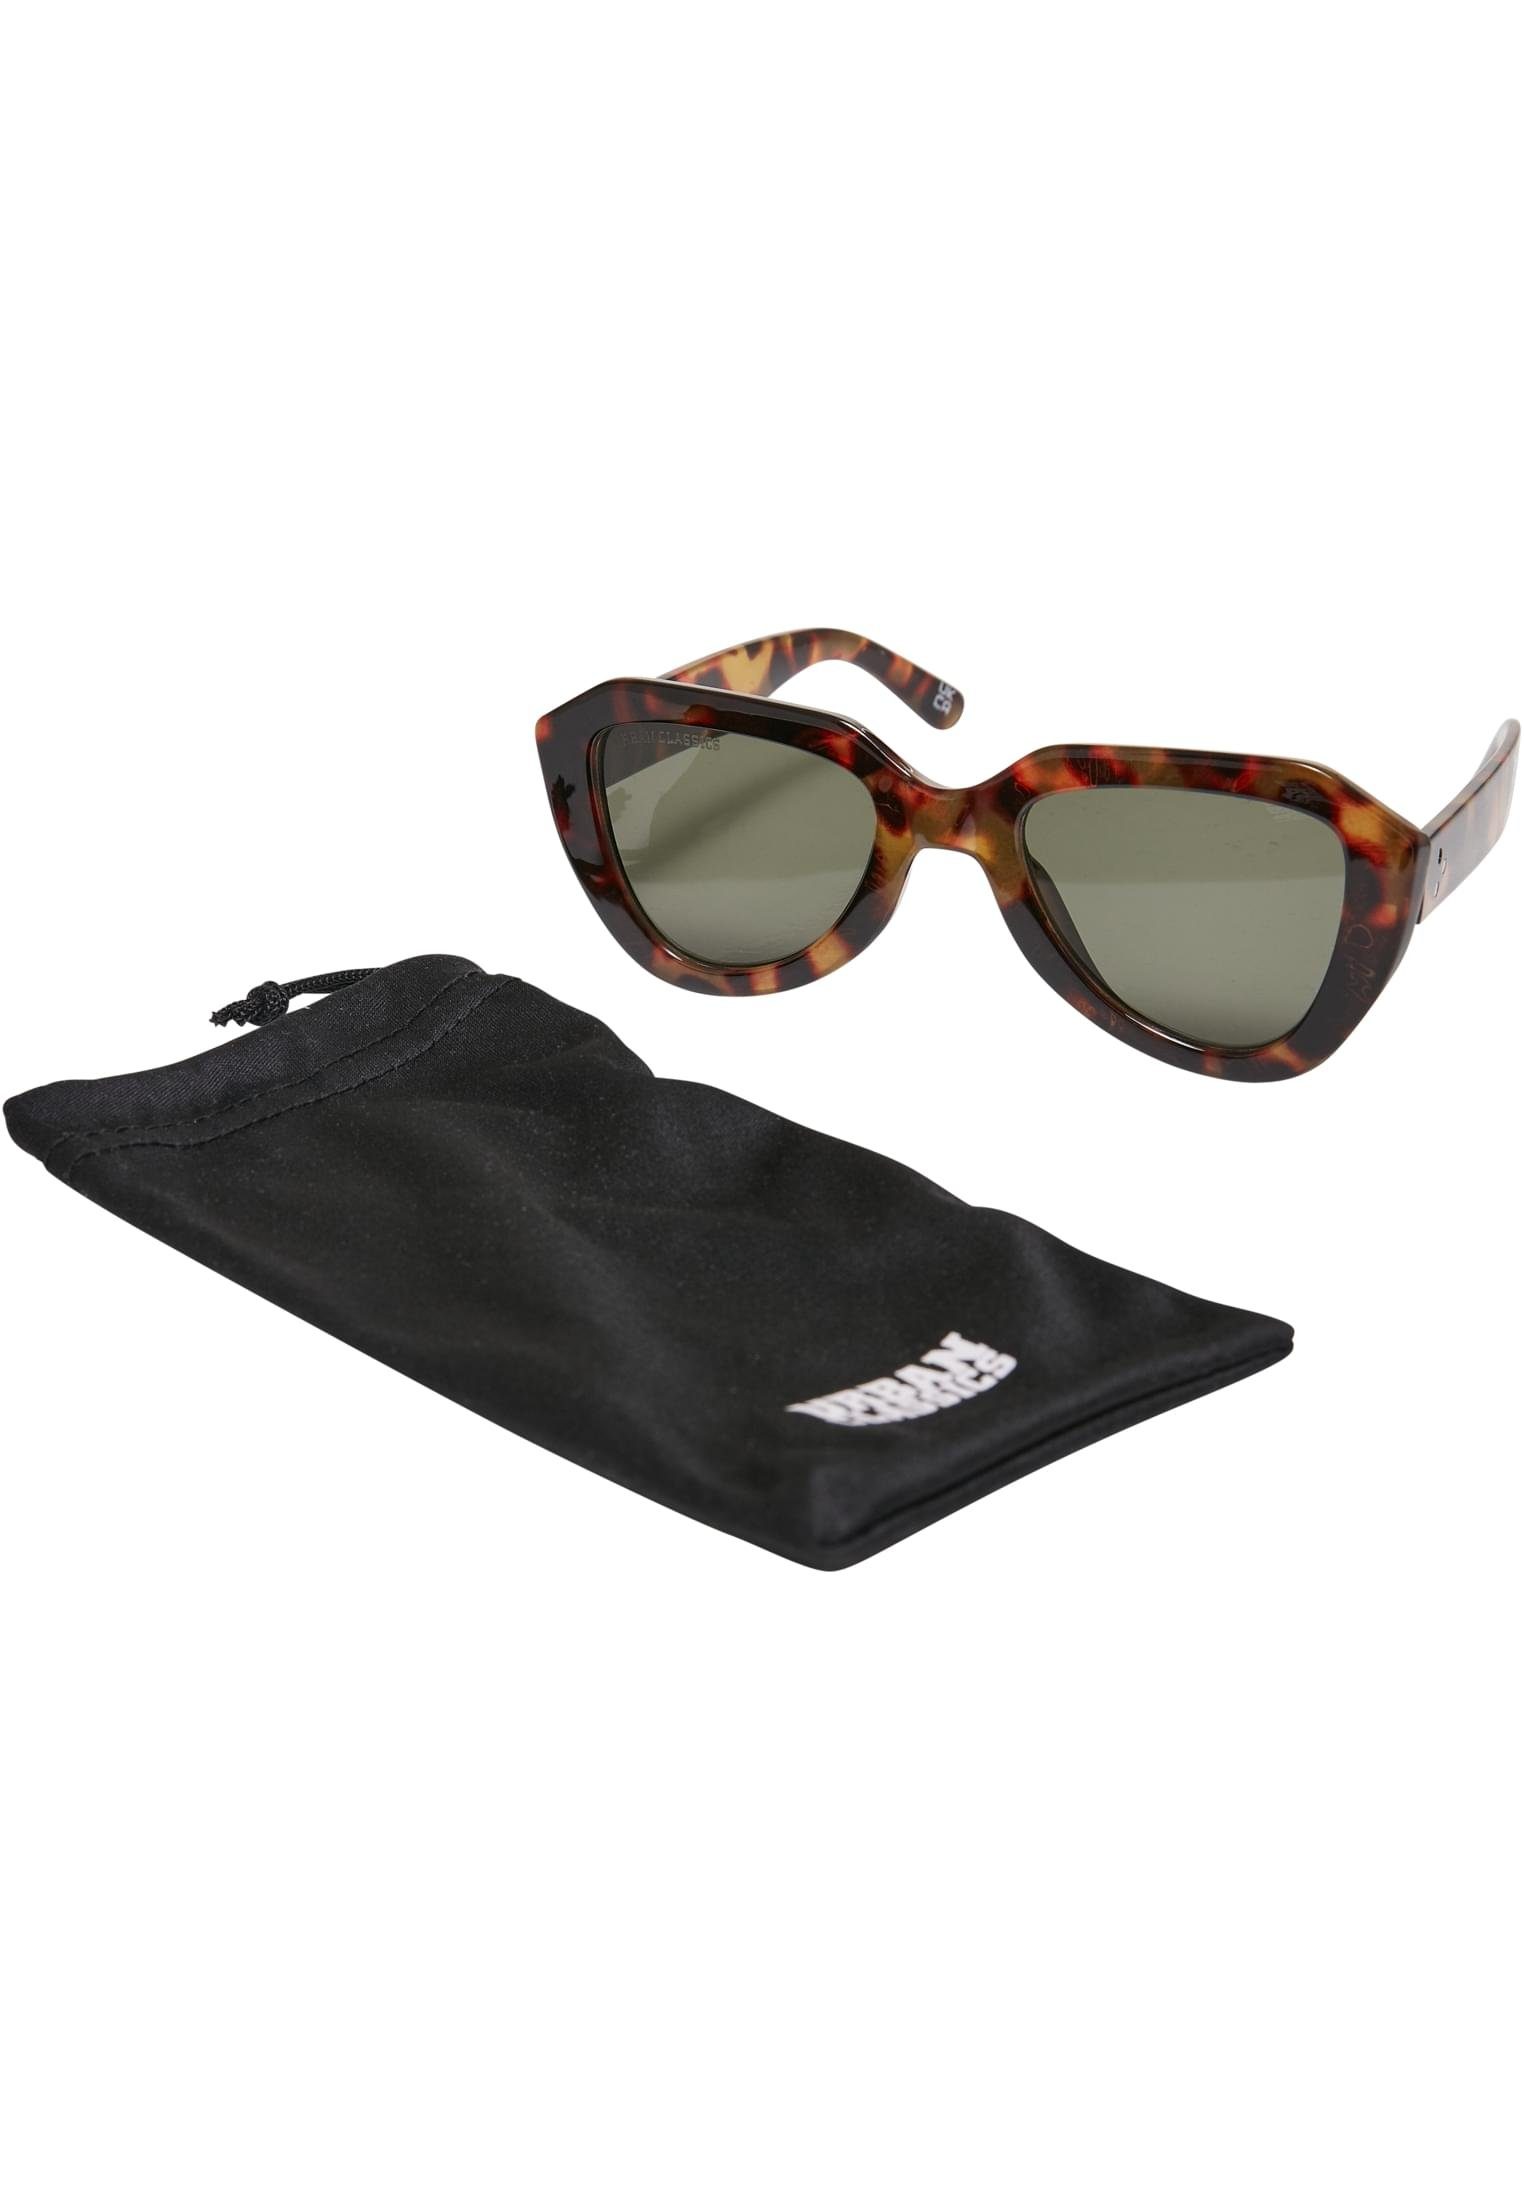 Sunglasses amber Houston CLASSICS URBAN Unisex Sonnenbrille